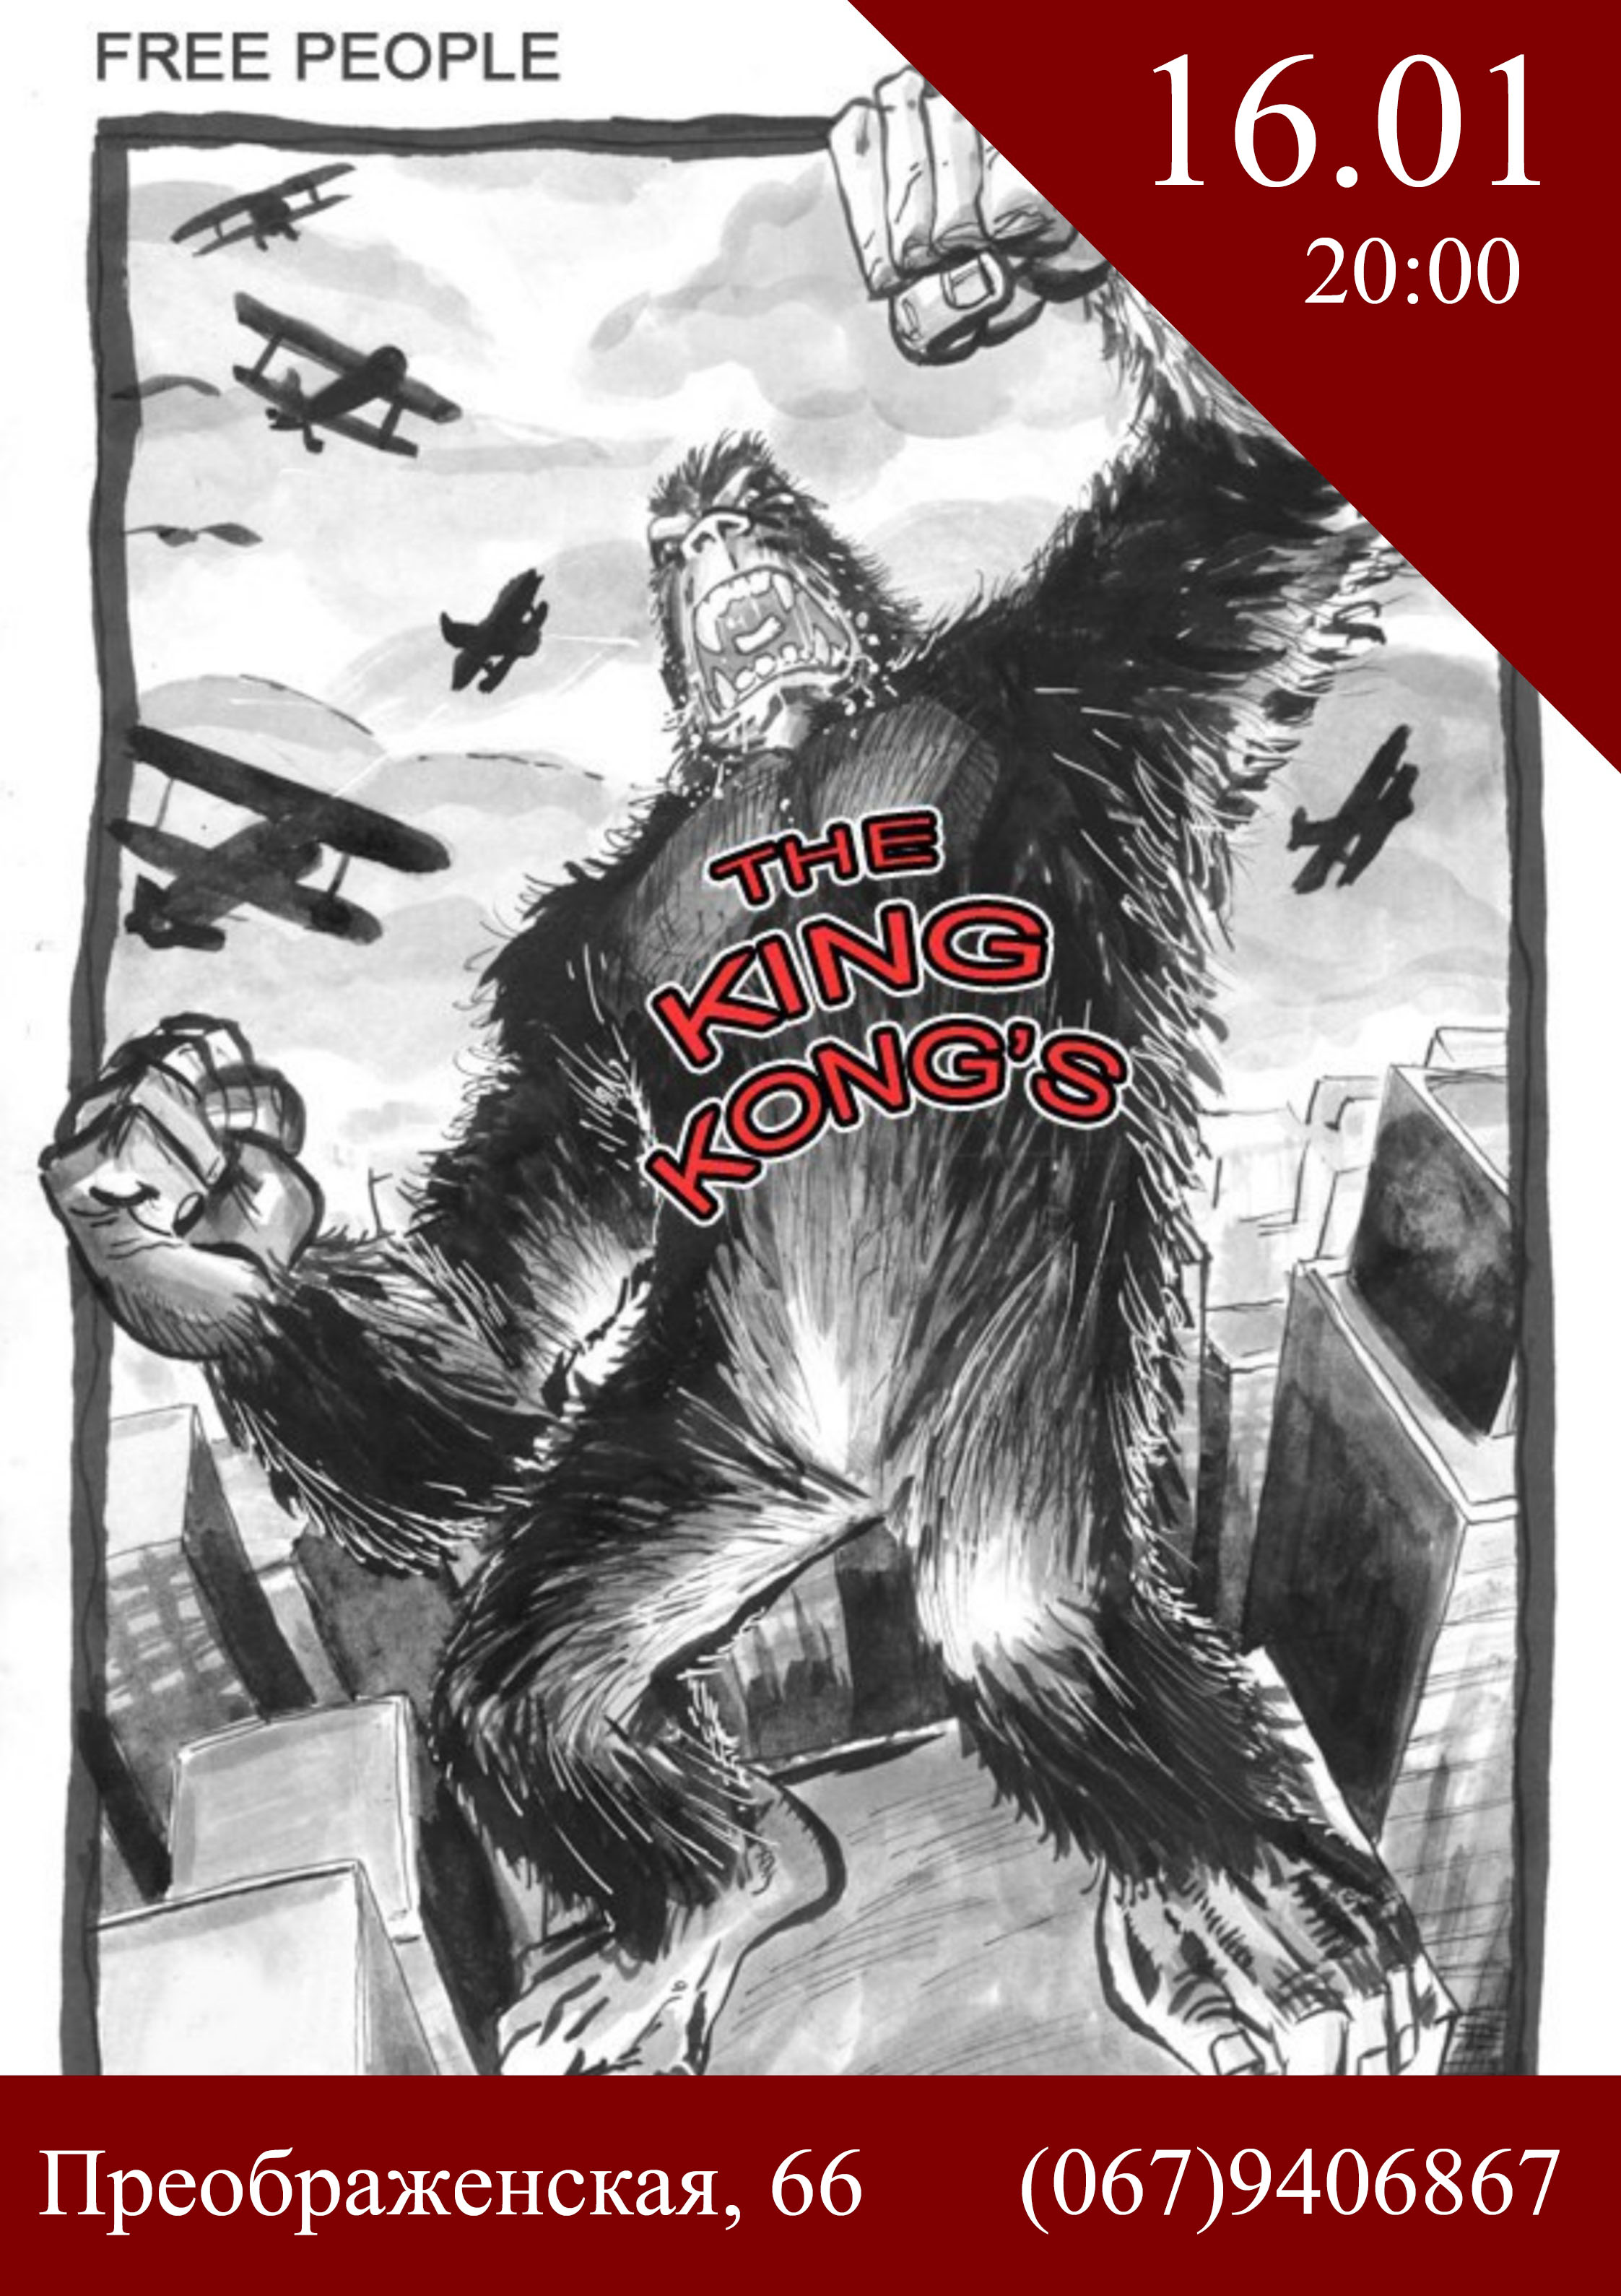    The King Kongs